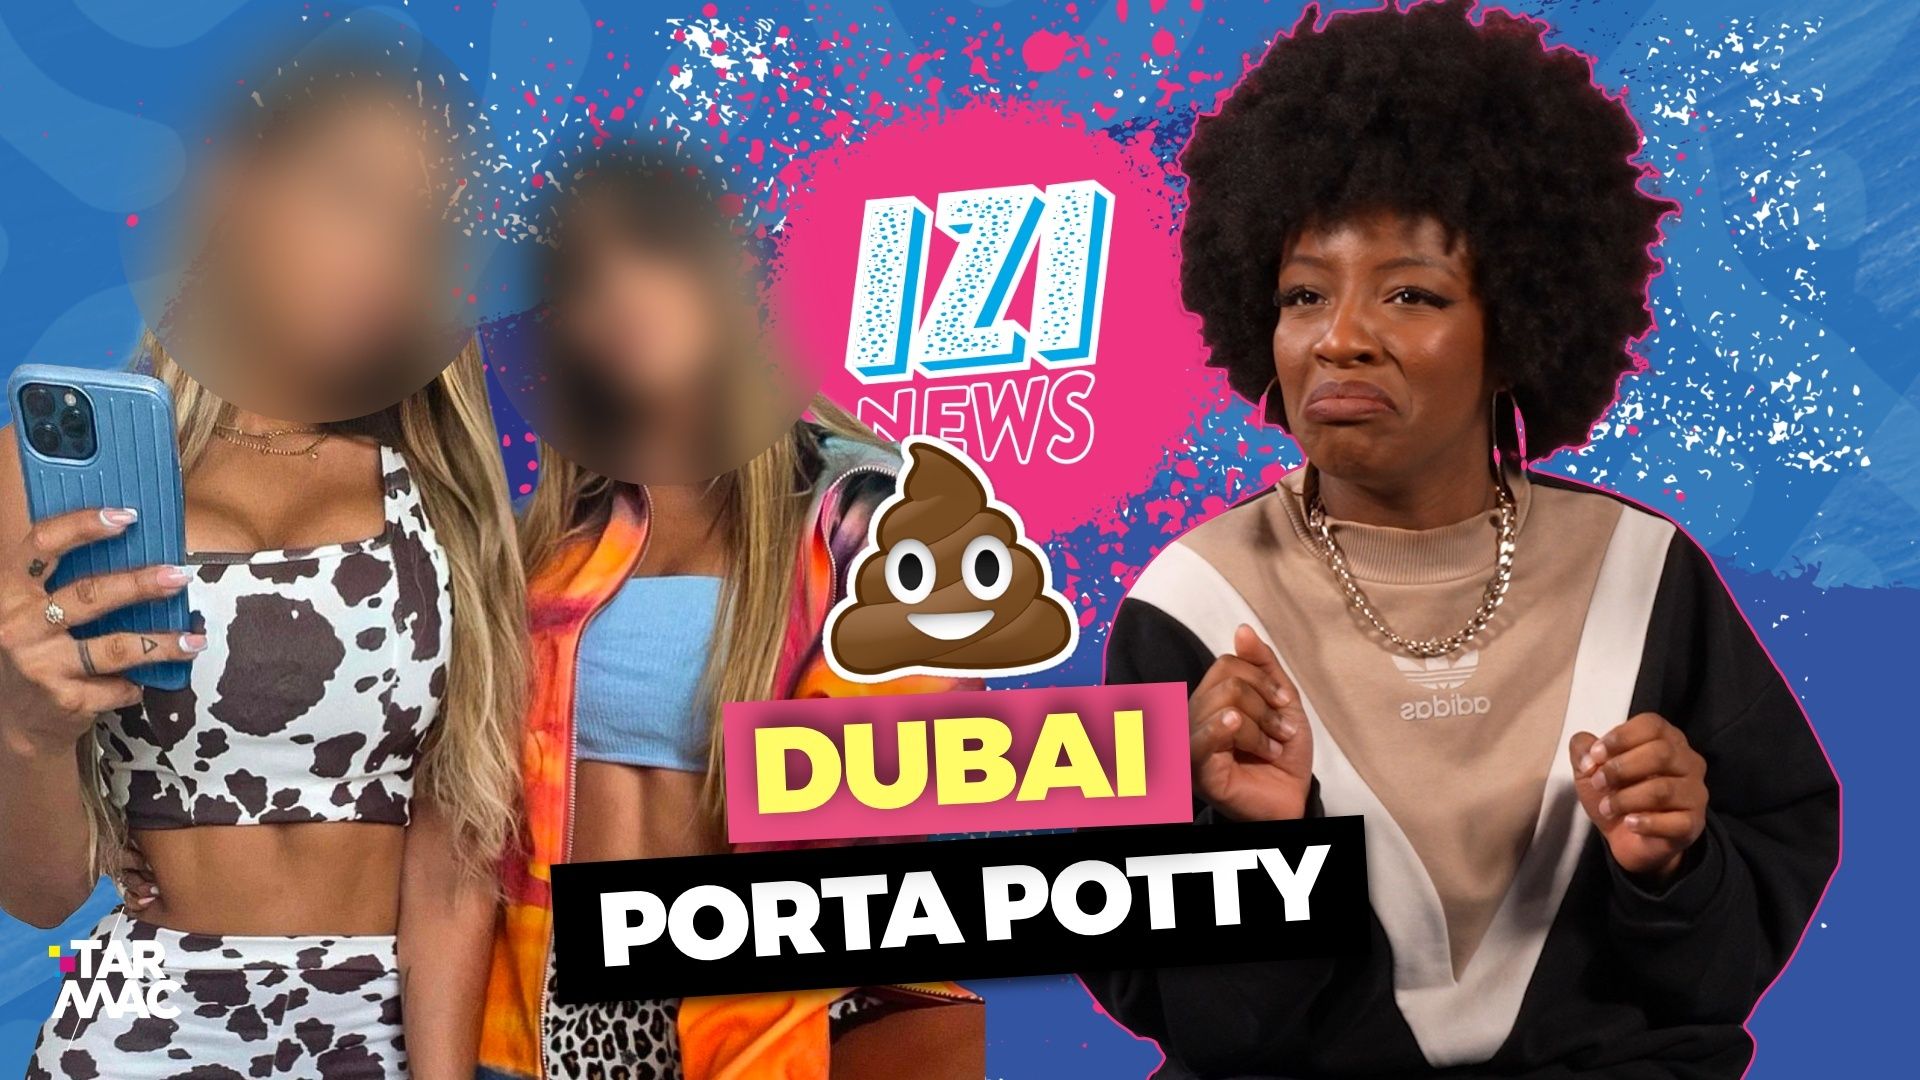 IZI NEWS : Dubaï porta potty